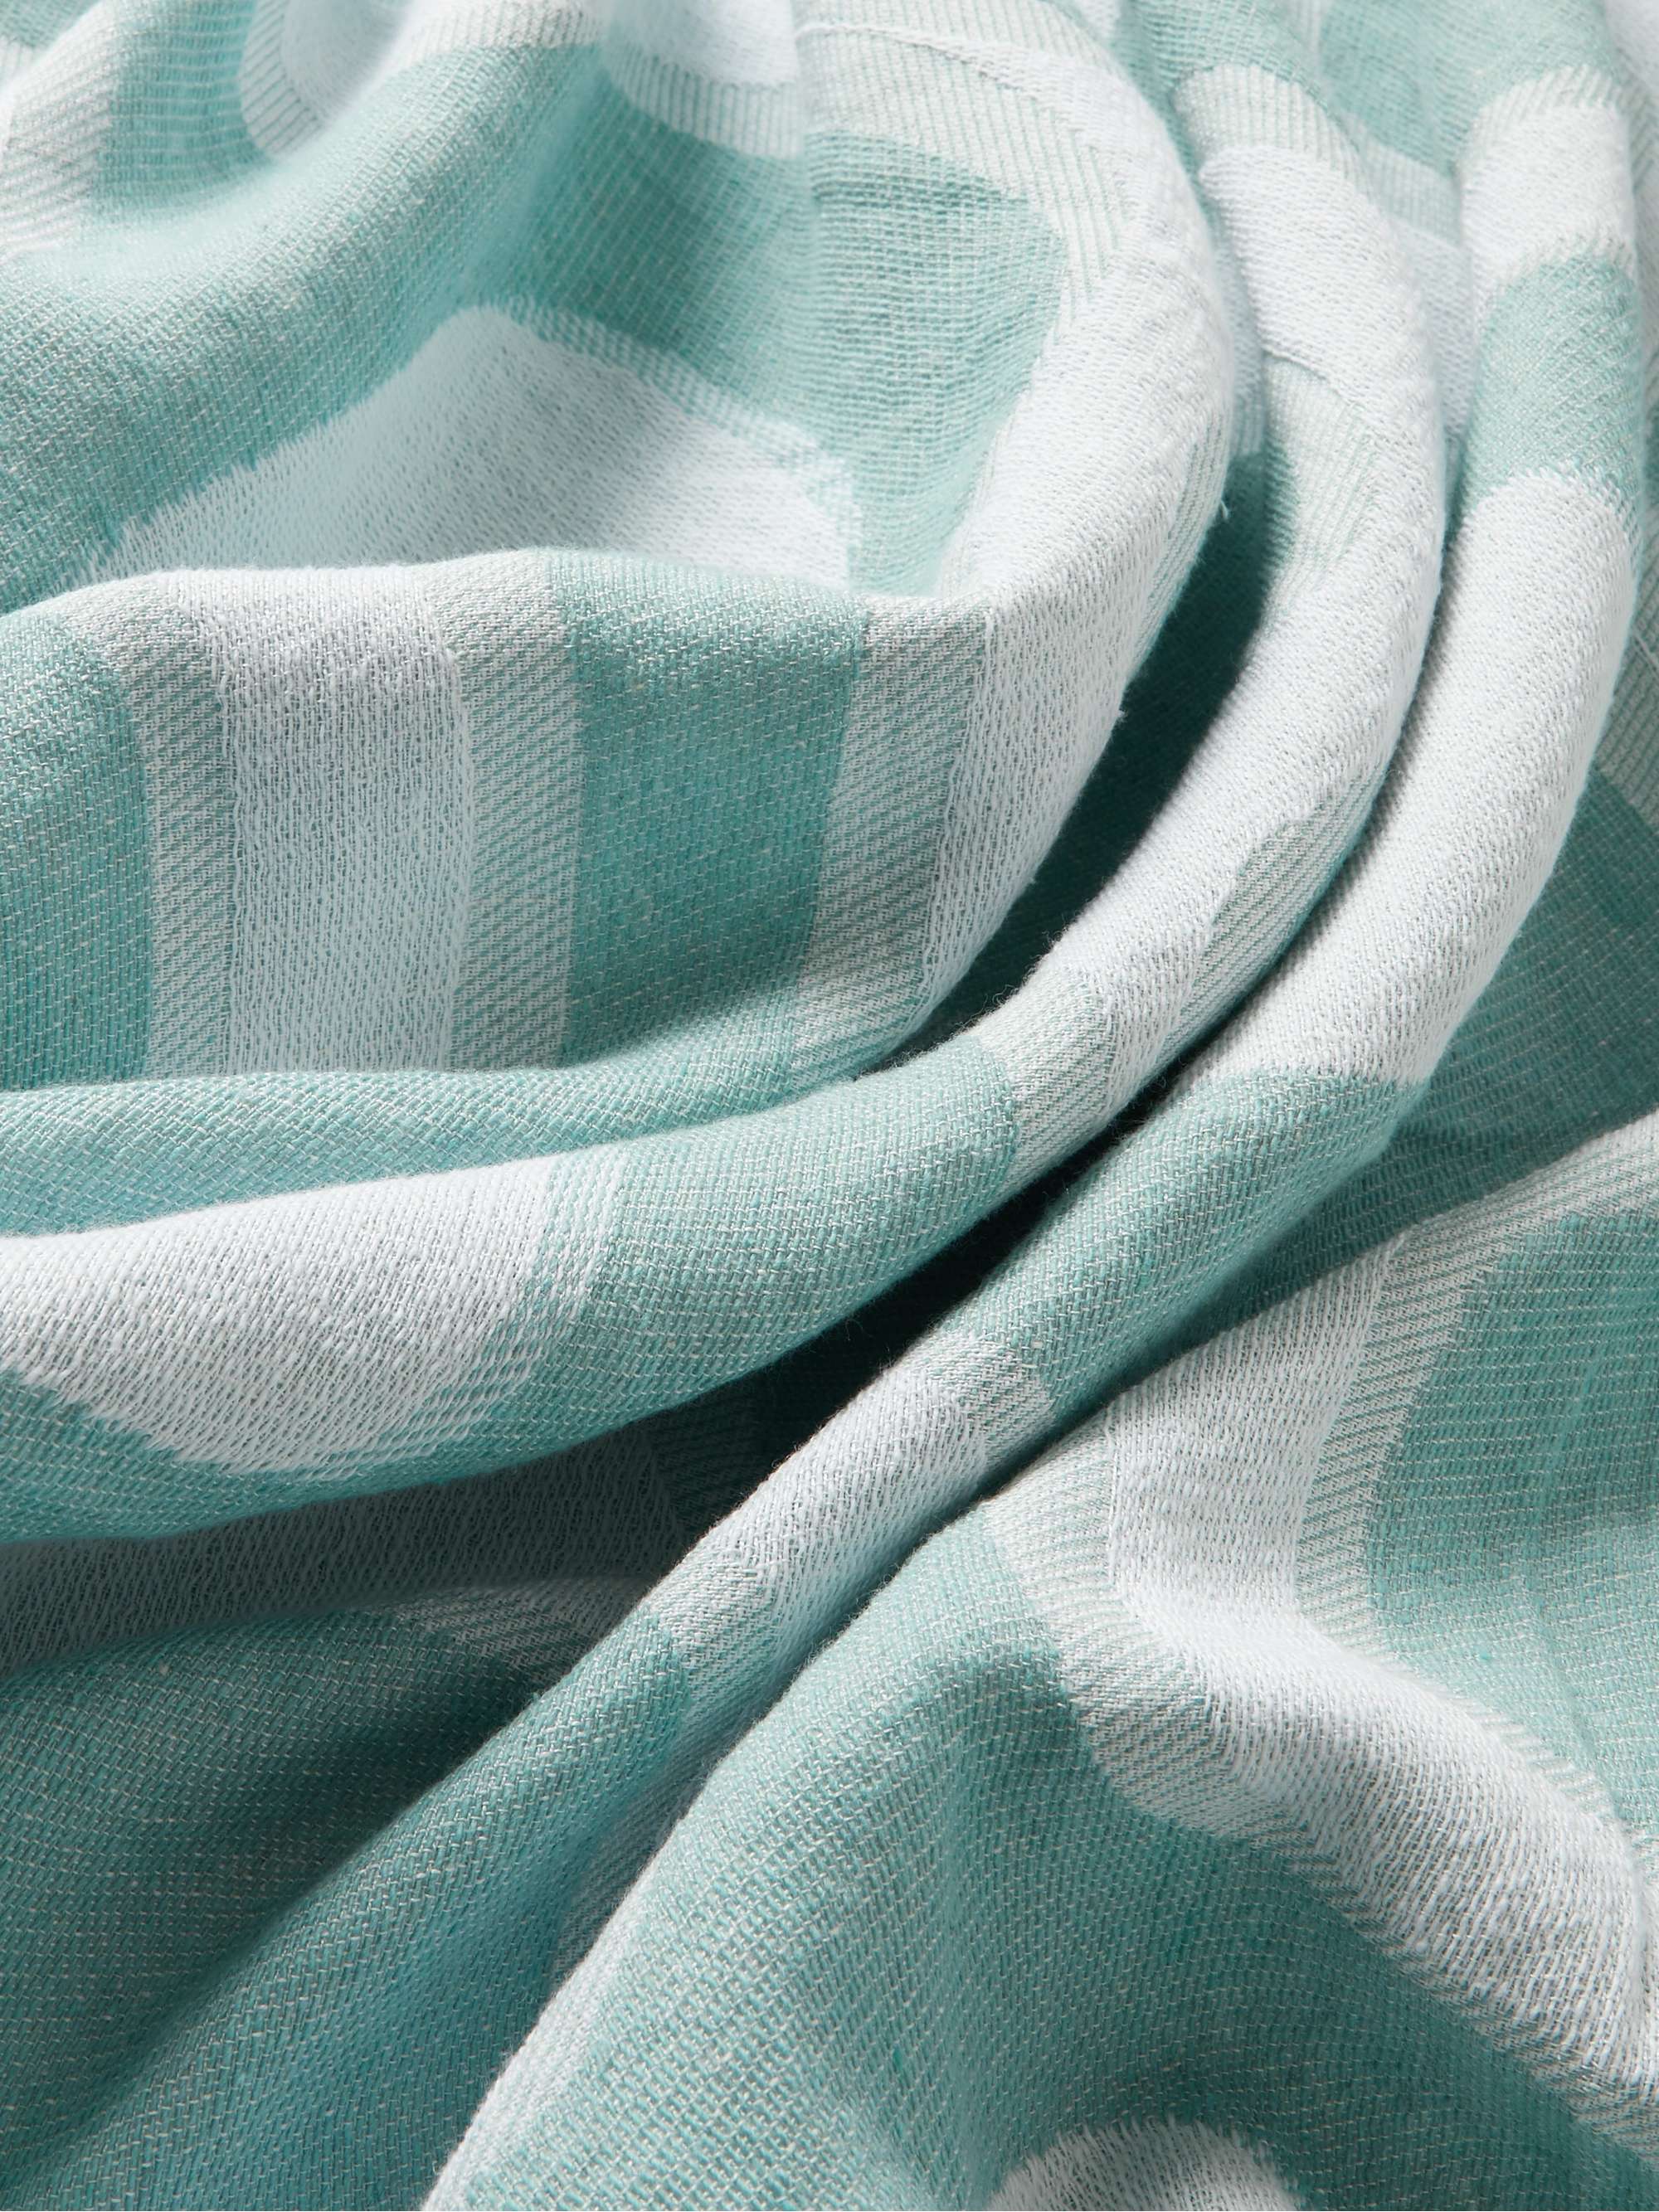 FRESCOBOL CARIOCA Cotton and Linen-Blend Jacquard Beach Blanket